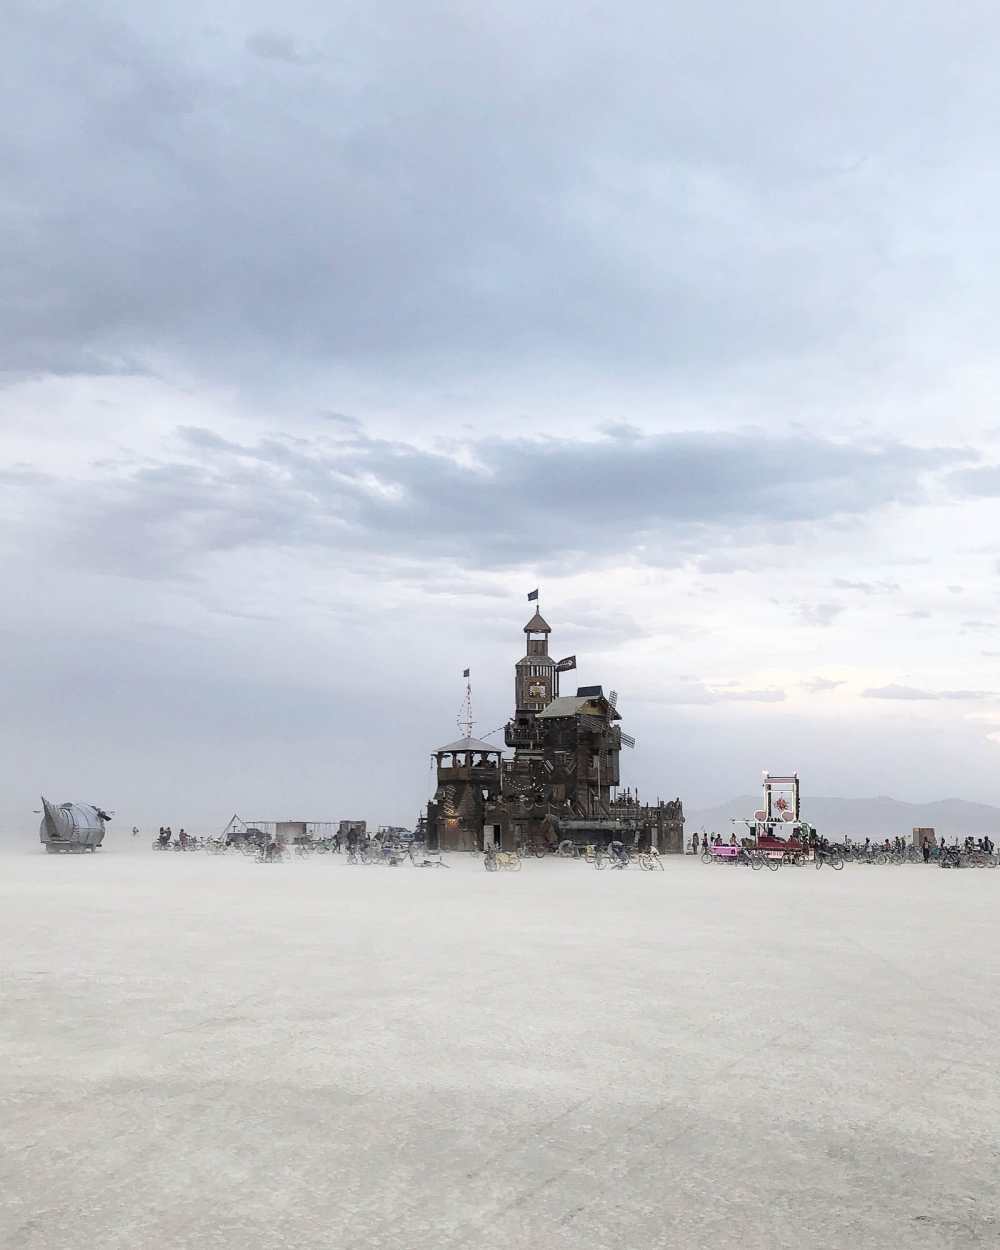  Руководство для новичков по Burning Man (20) 